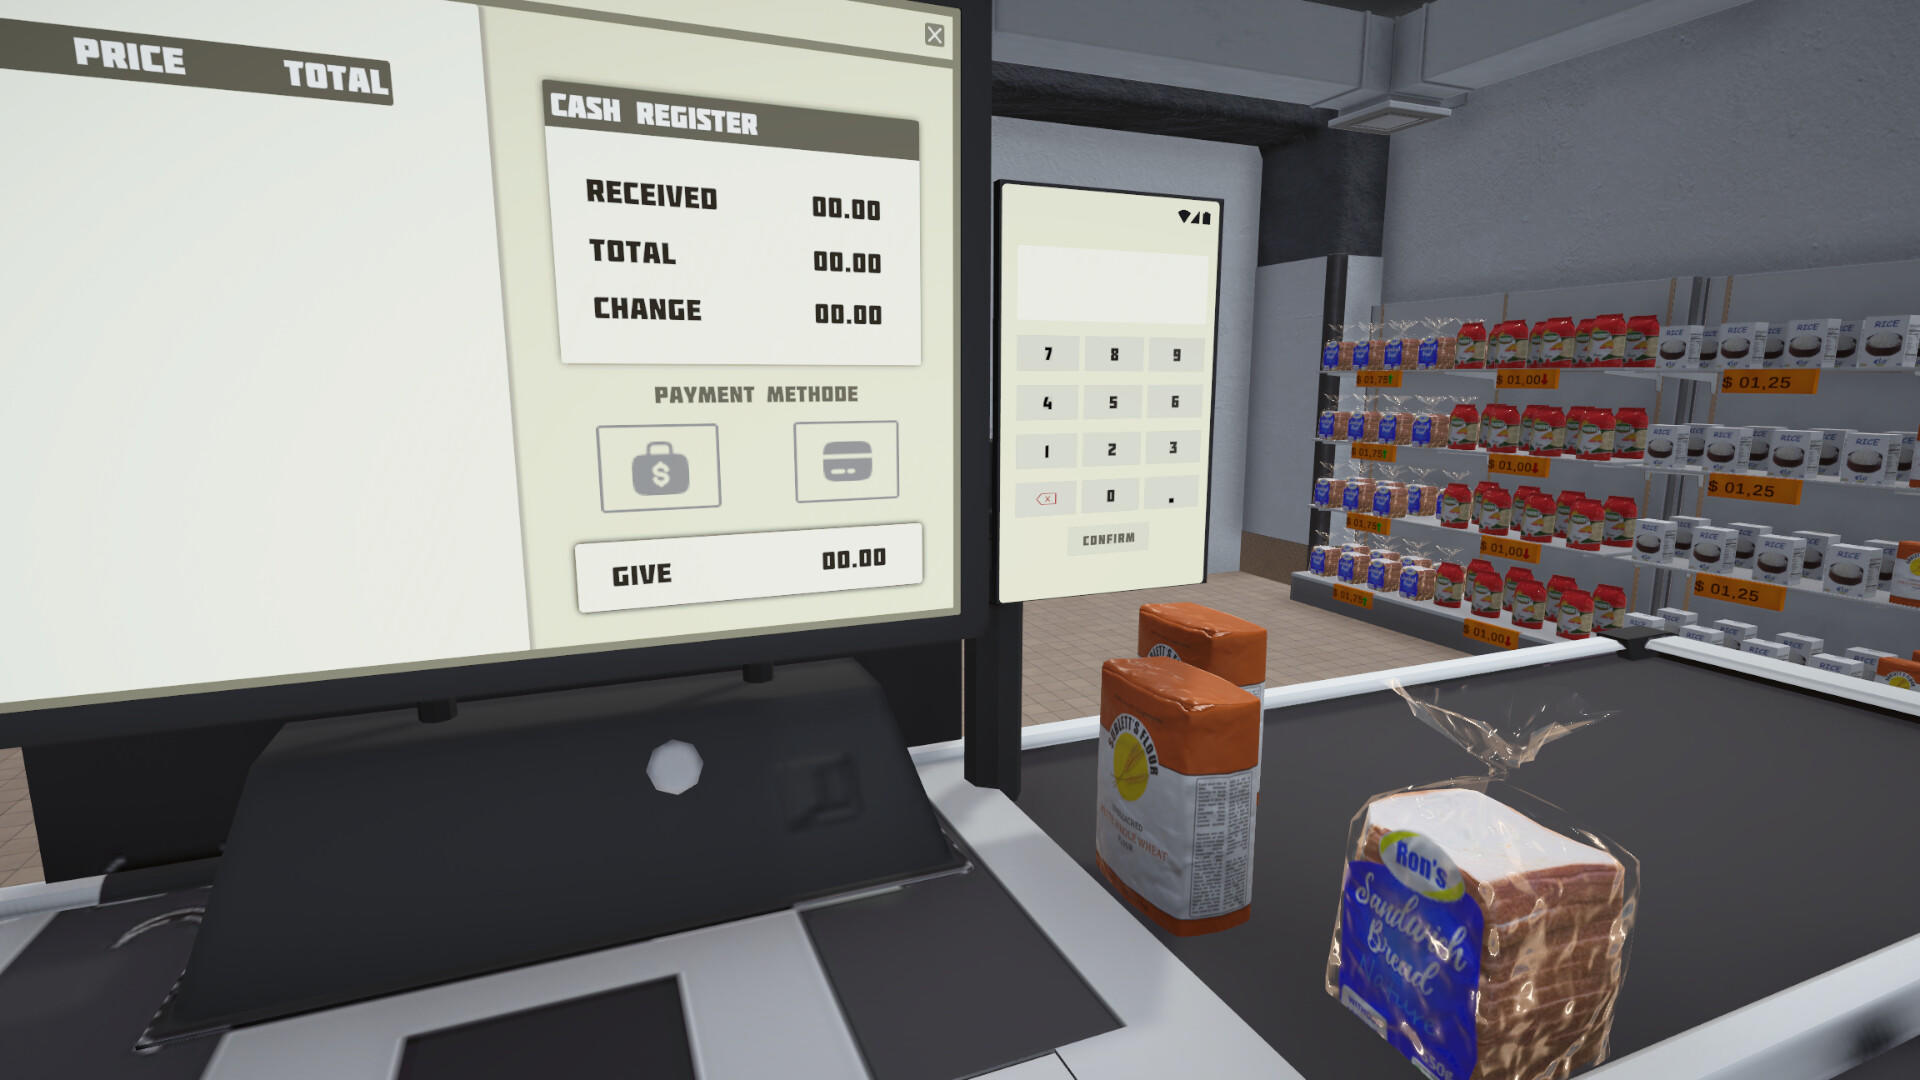 Screenshot of siMarket Supermarket Simulator